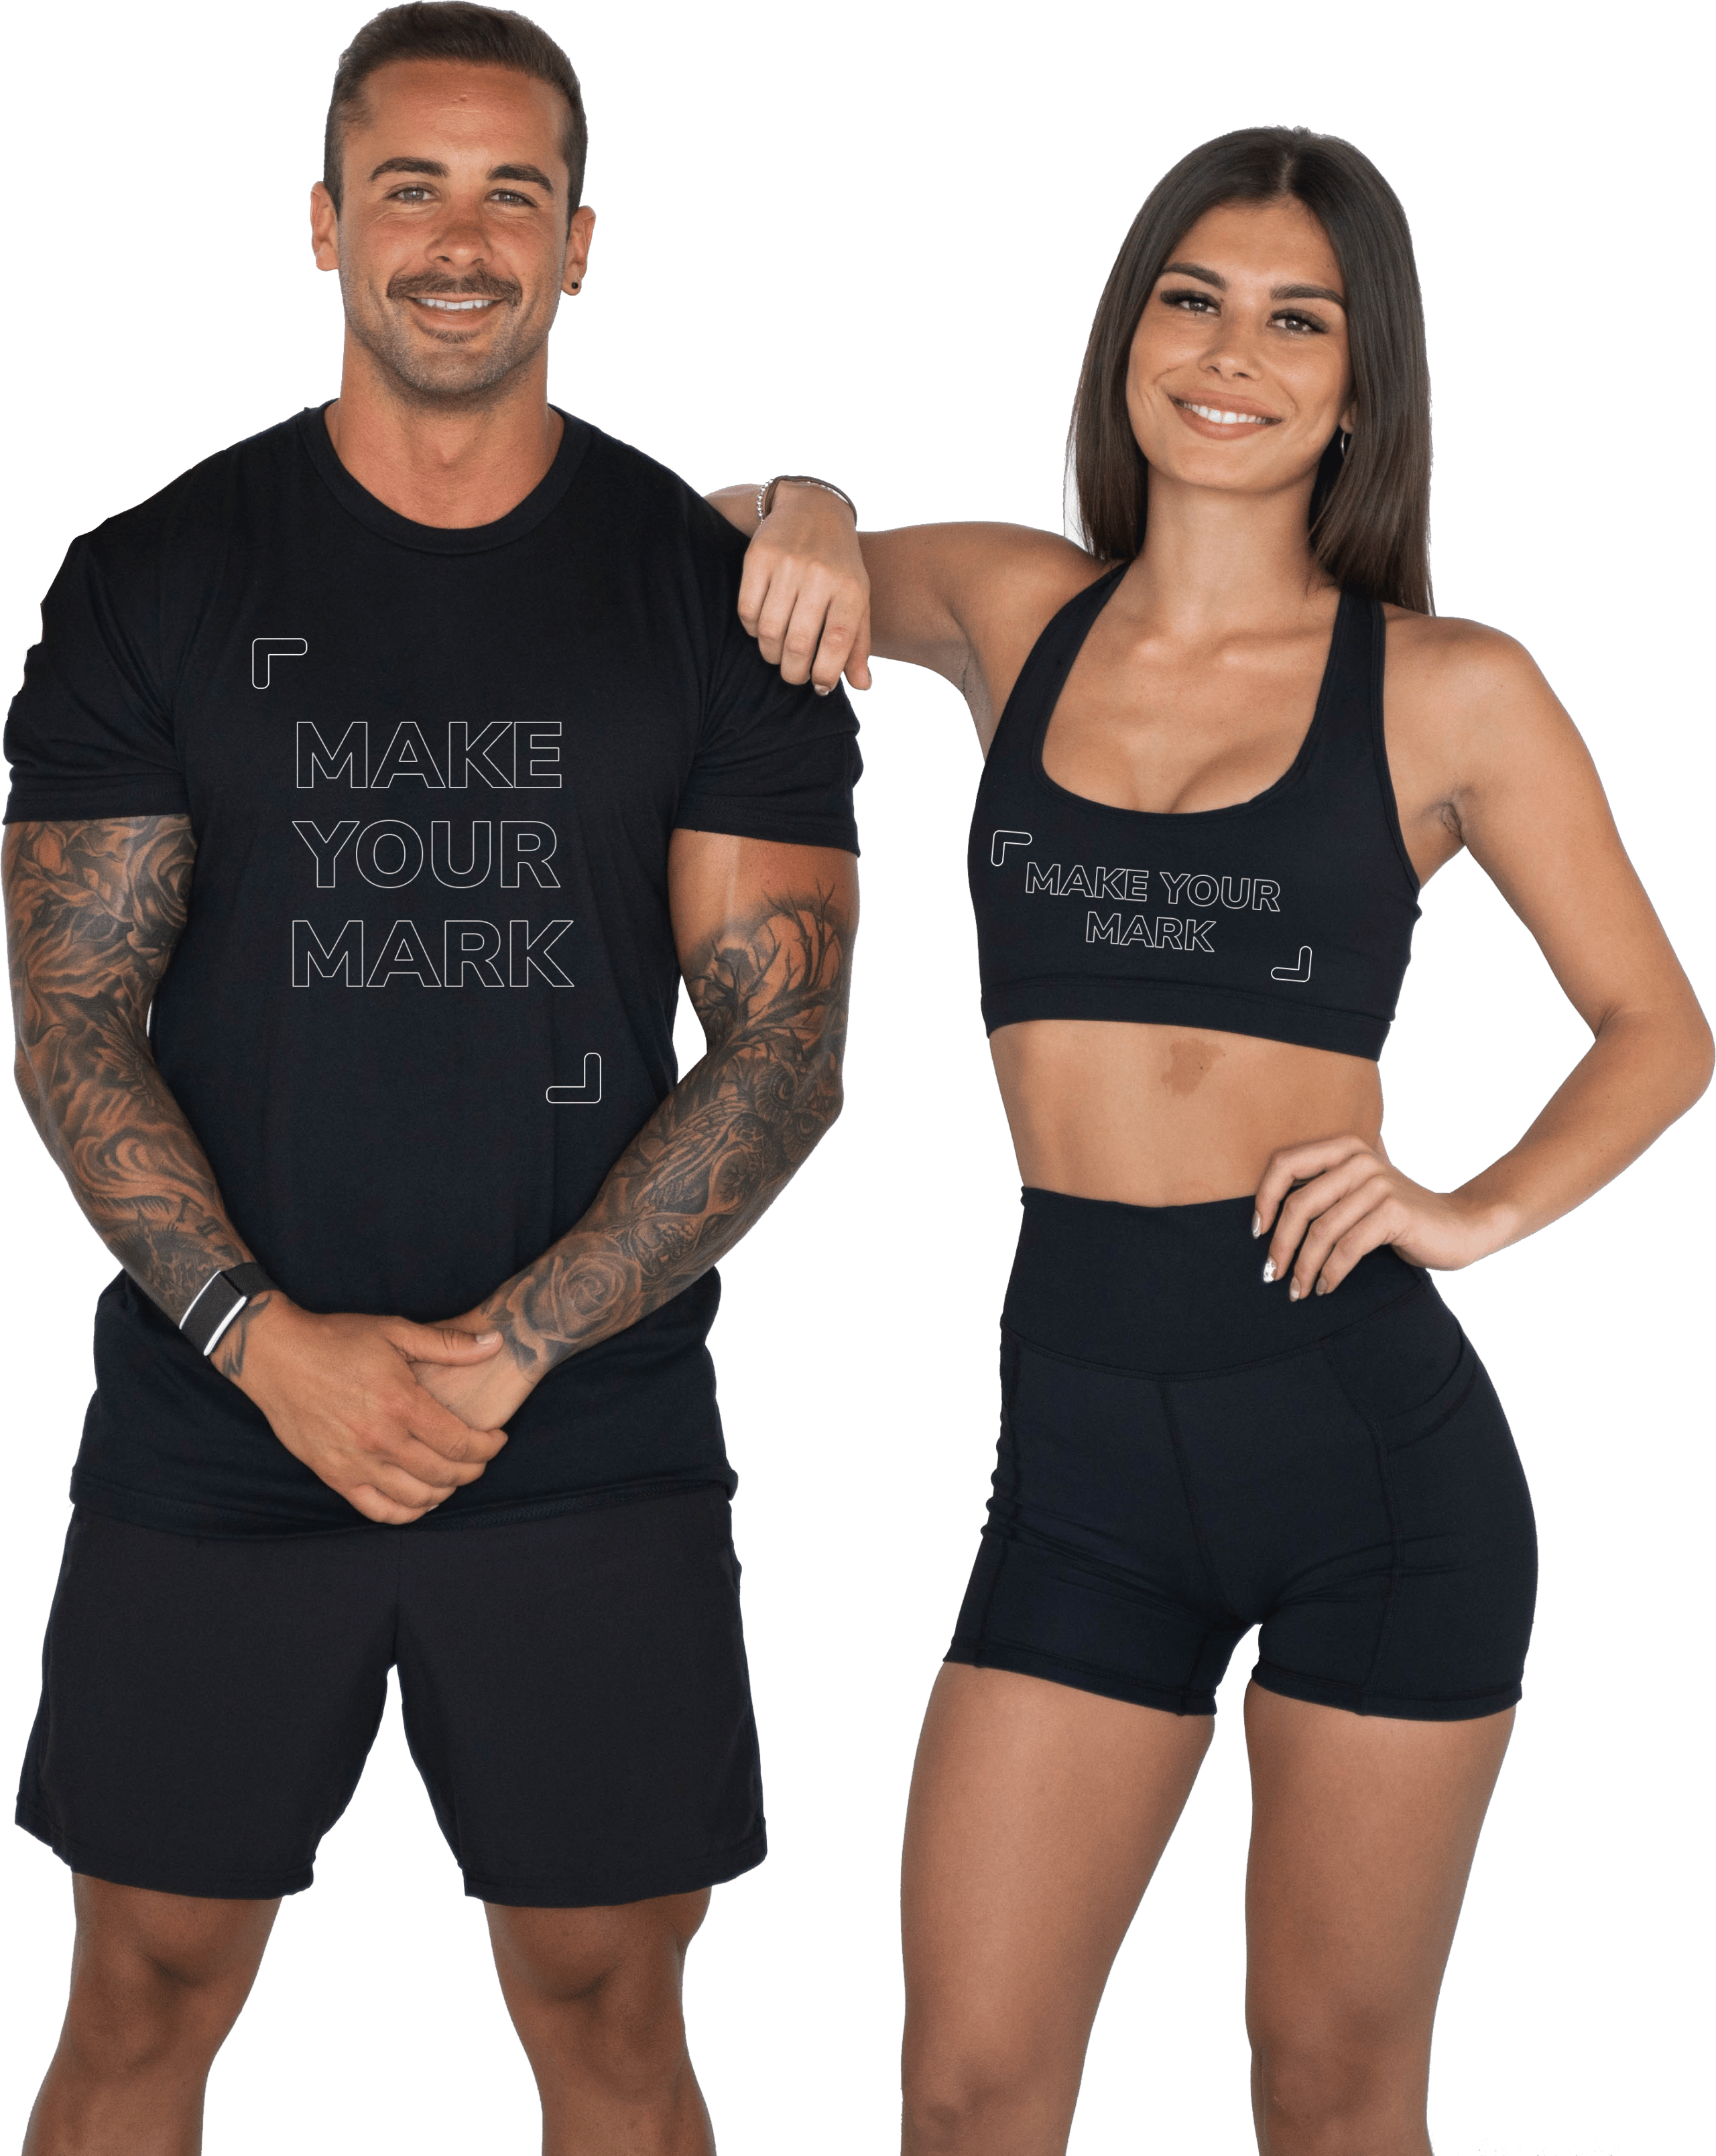 Sample fitness apparel